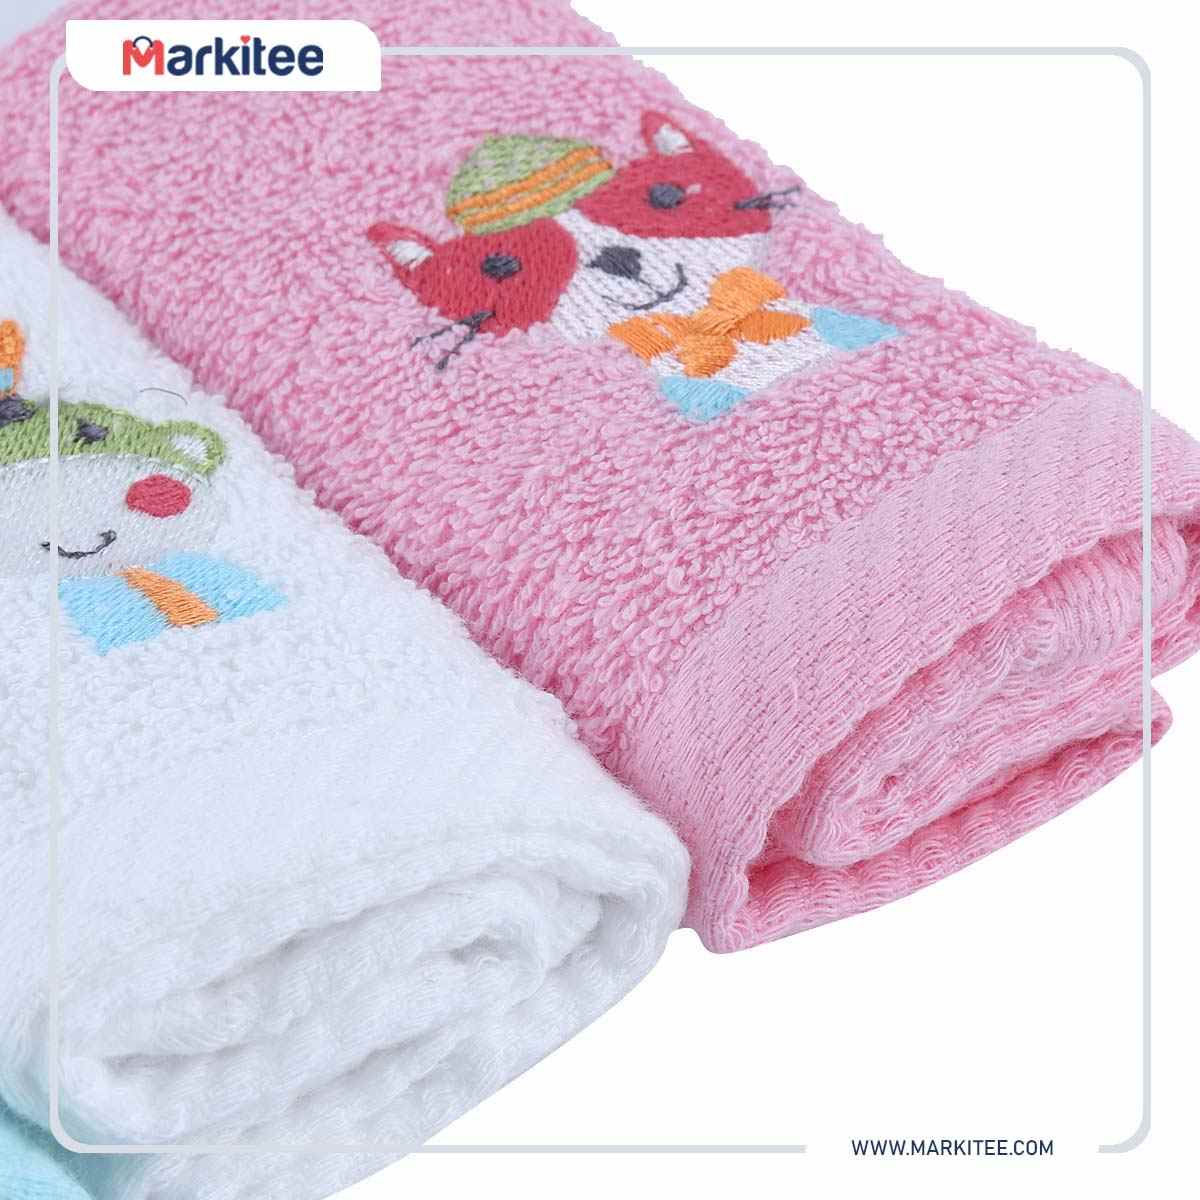 Babies bath towel set ...-NL-1012-EPWB